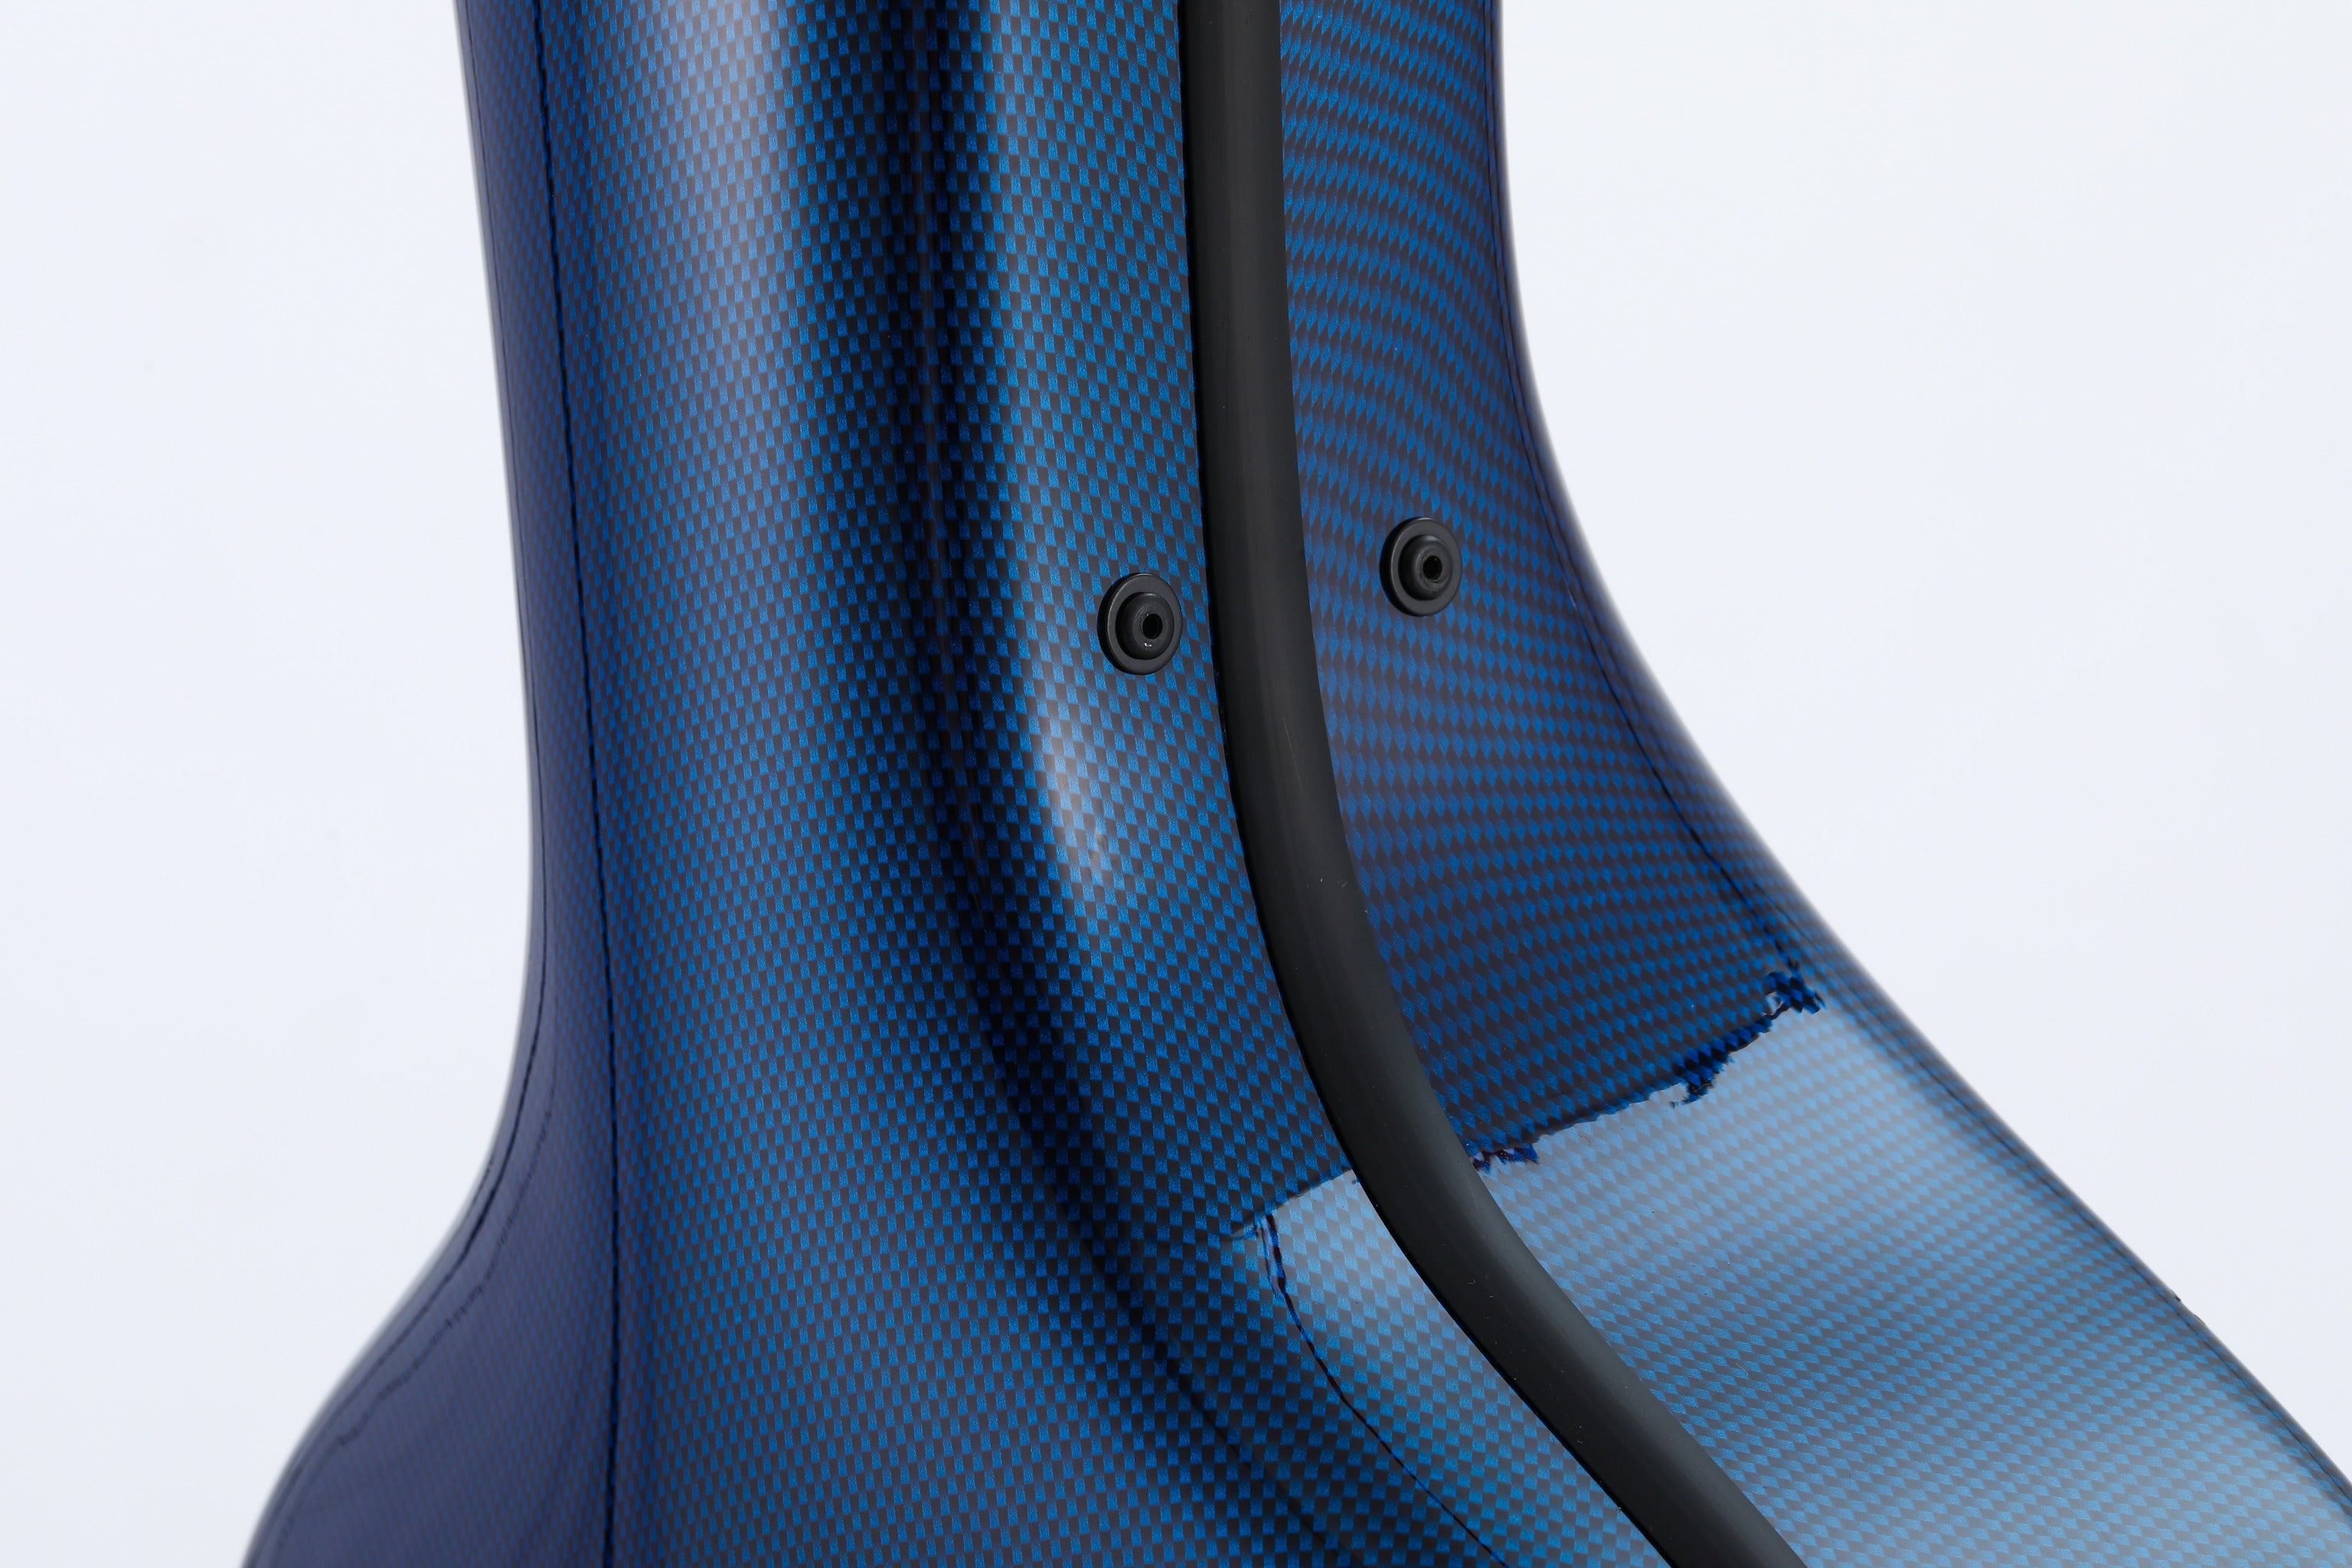 Alba Guitar Beads Case Blue Carbon Pattern Gloss for Classical Guitar Acoustic, Flamenco guitar case